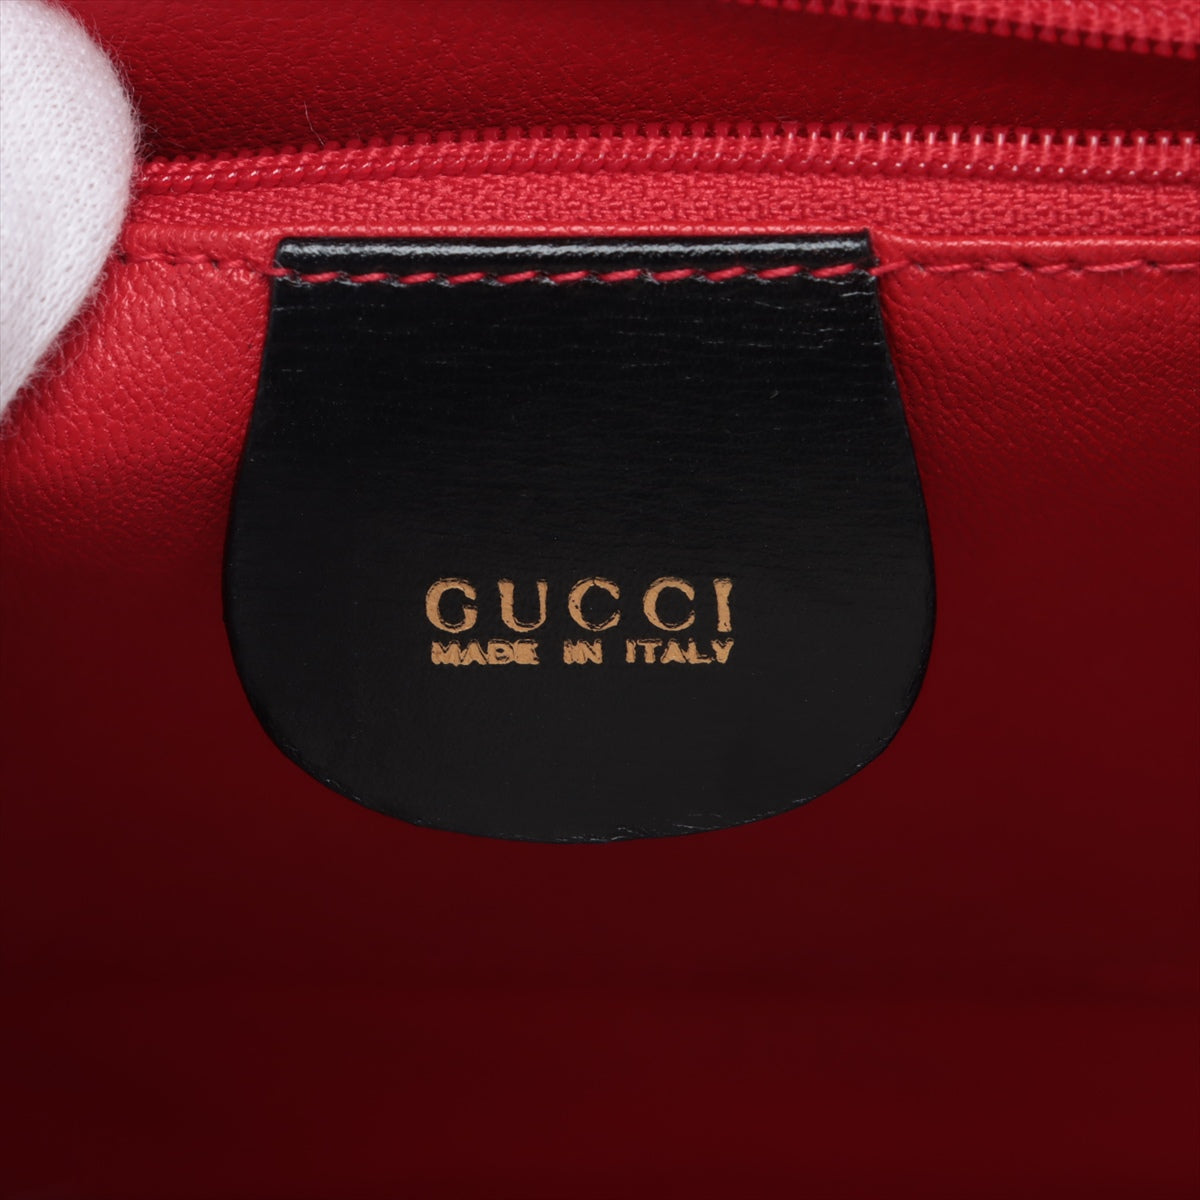 Gucci Vintage Leather Handbag Black